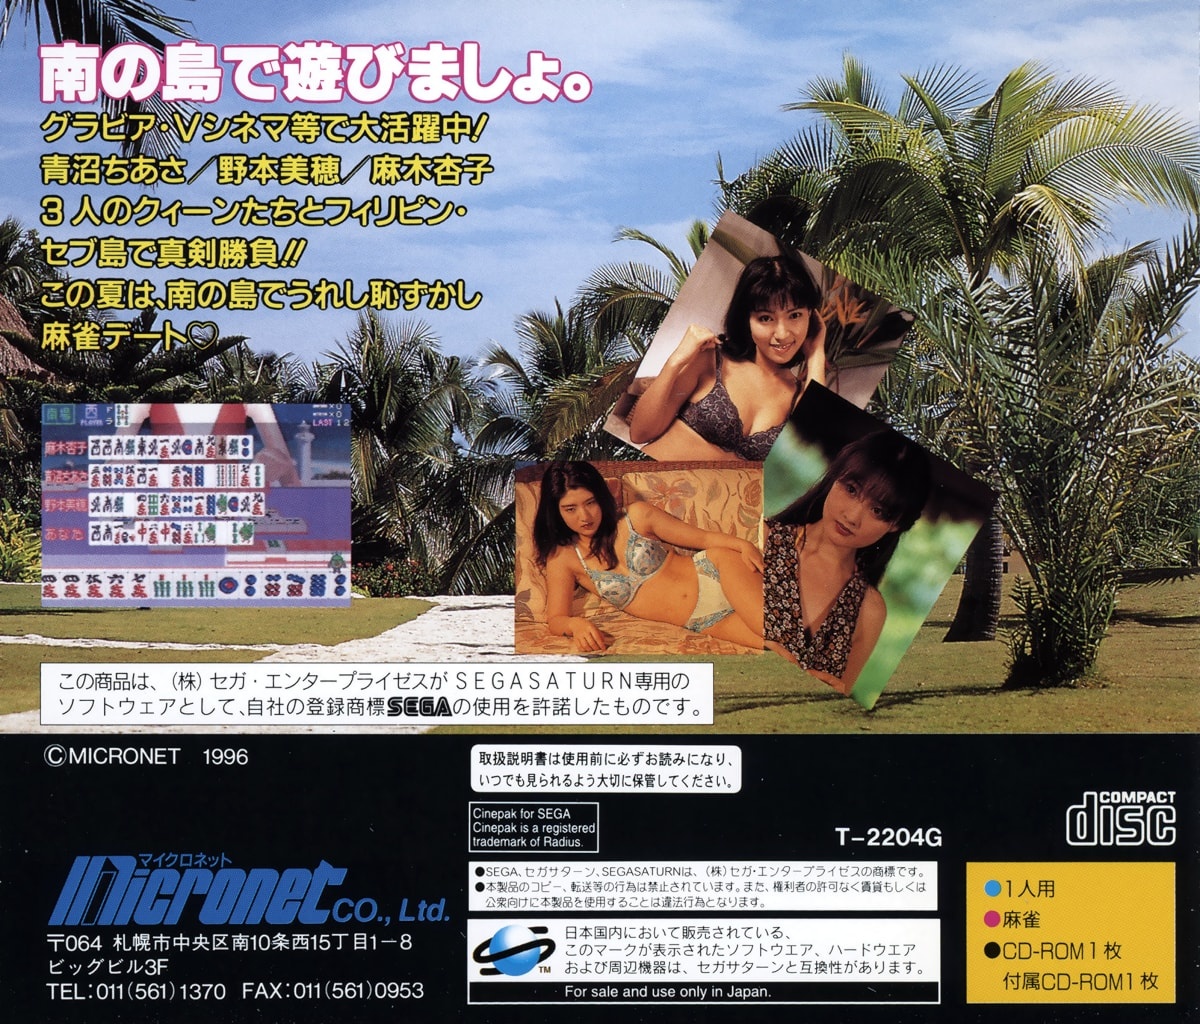 Capa do jogo Mahjong Kyou Jidai: Cebu Island 96